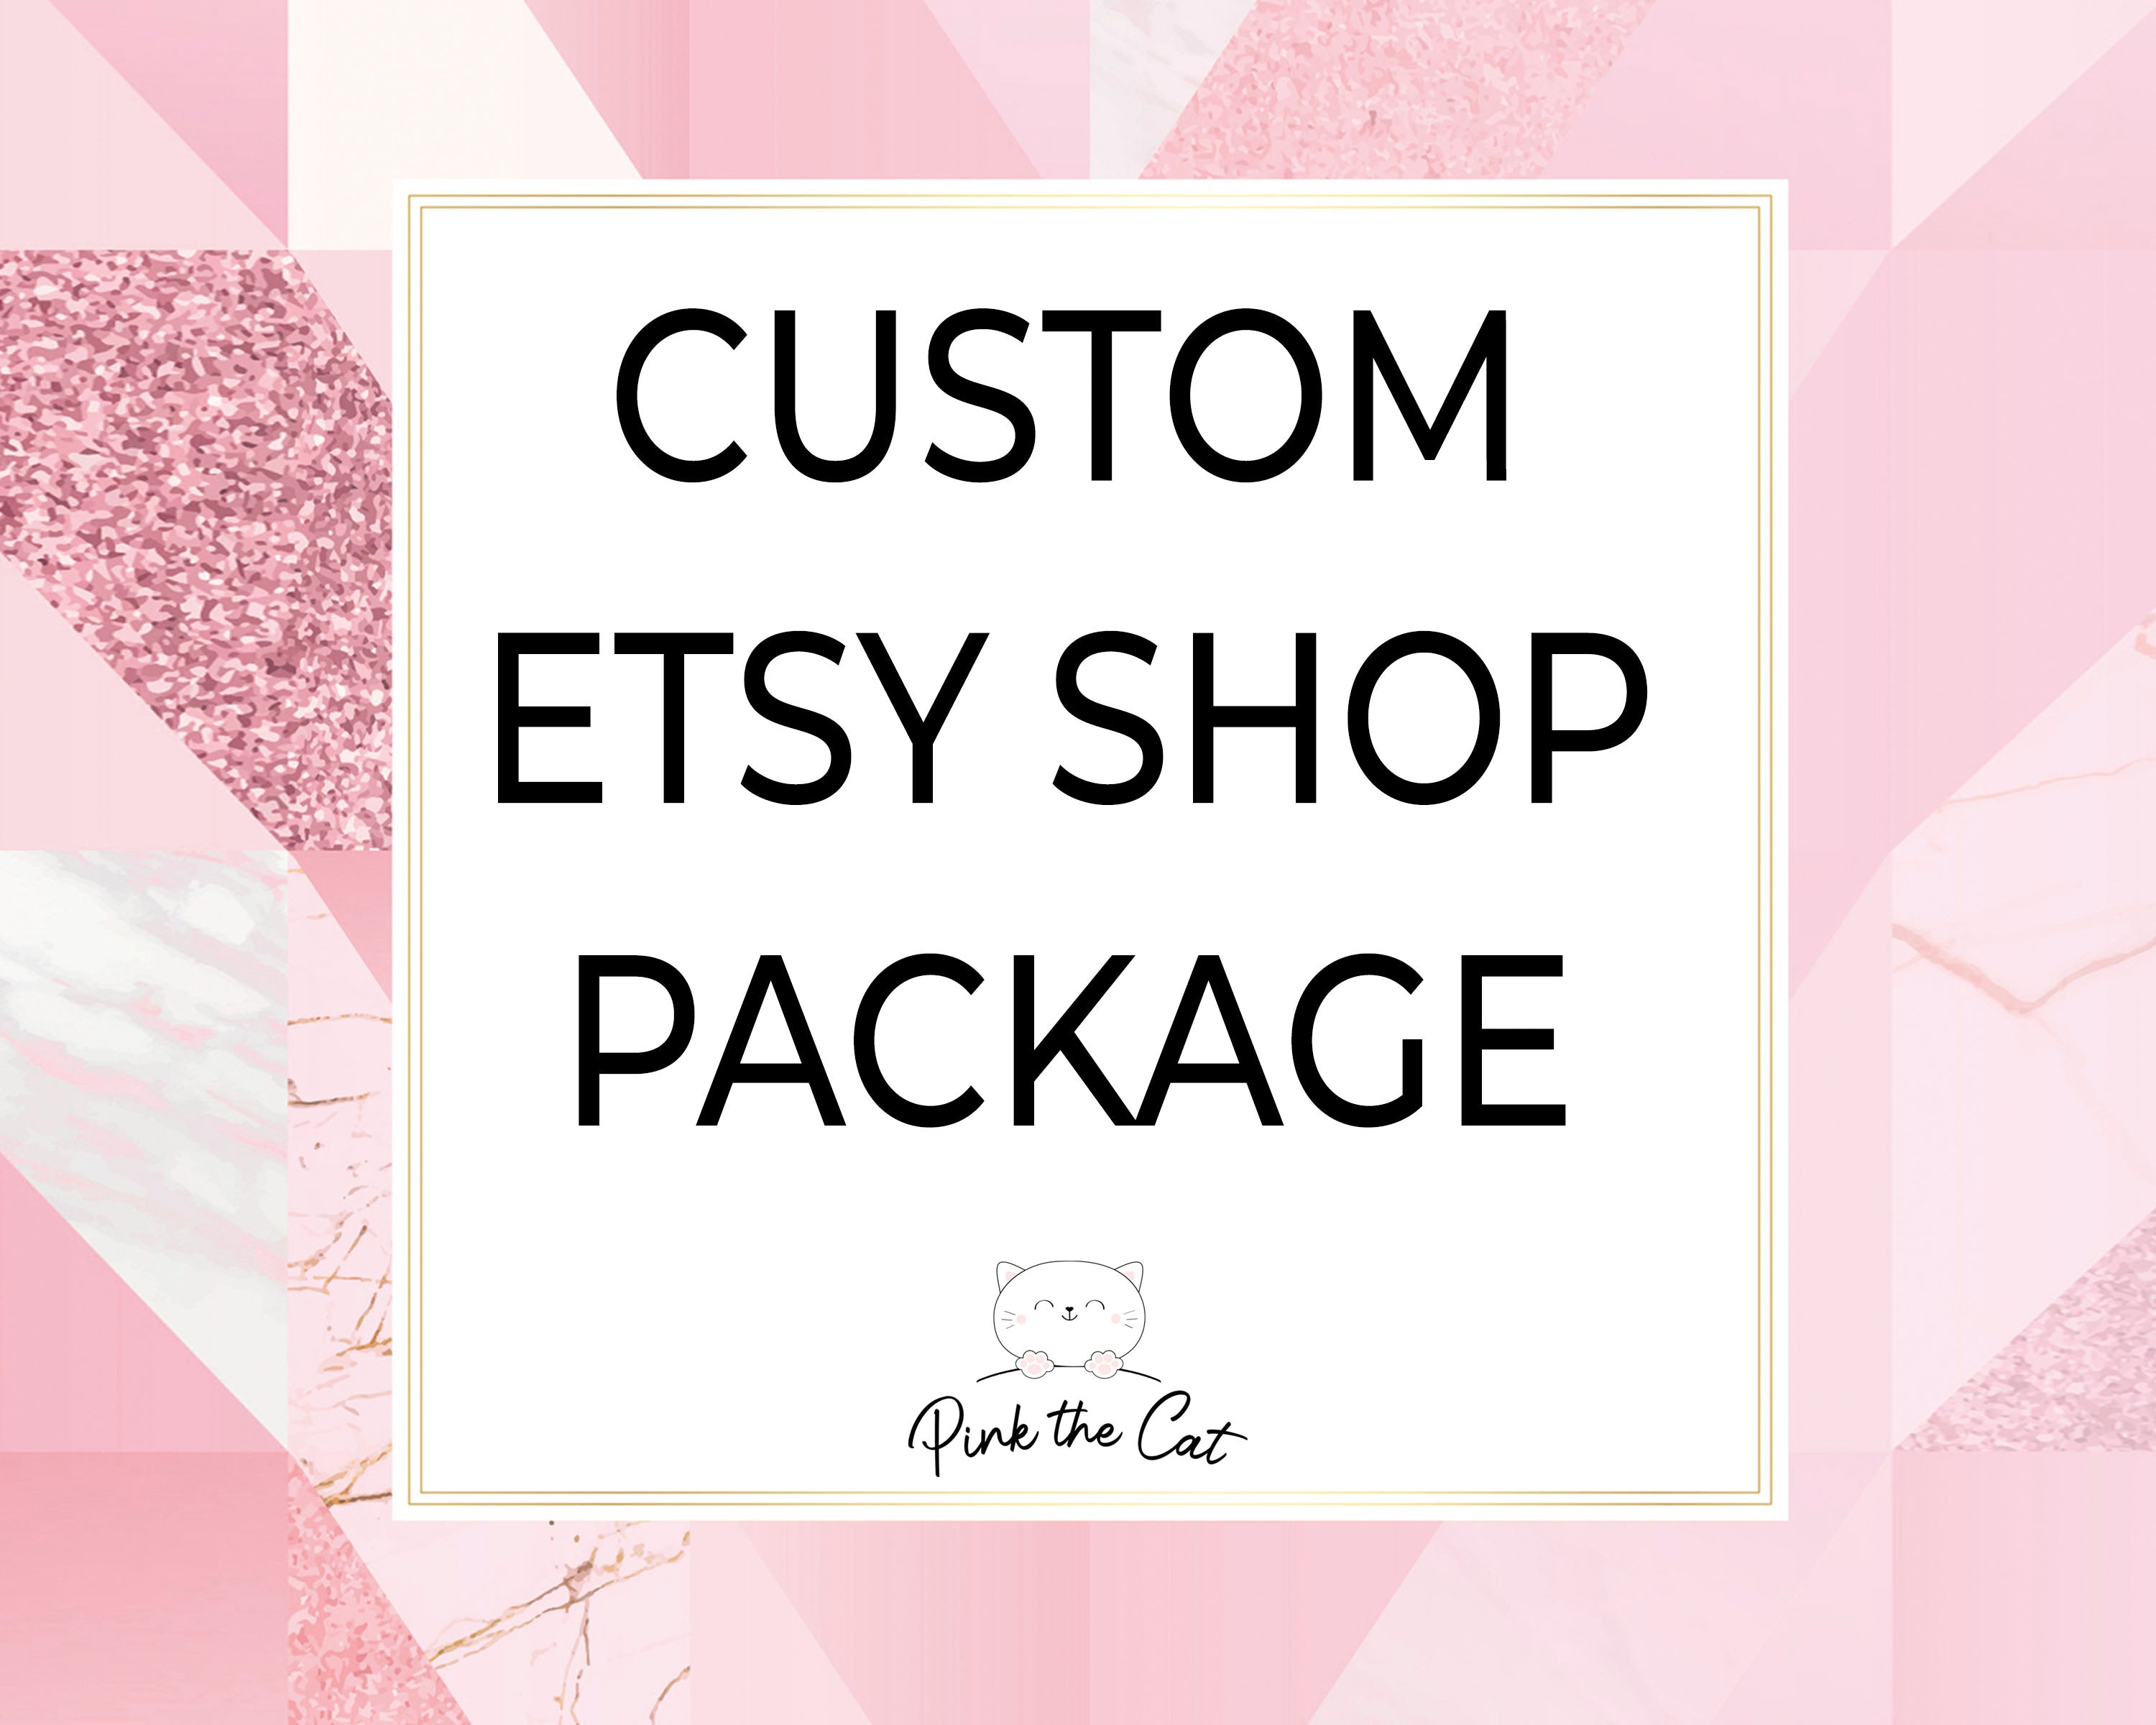 Custom etsy shop package design